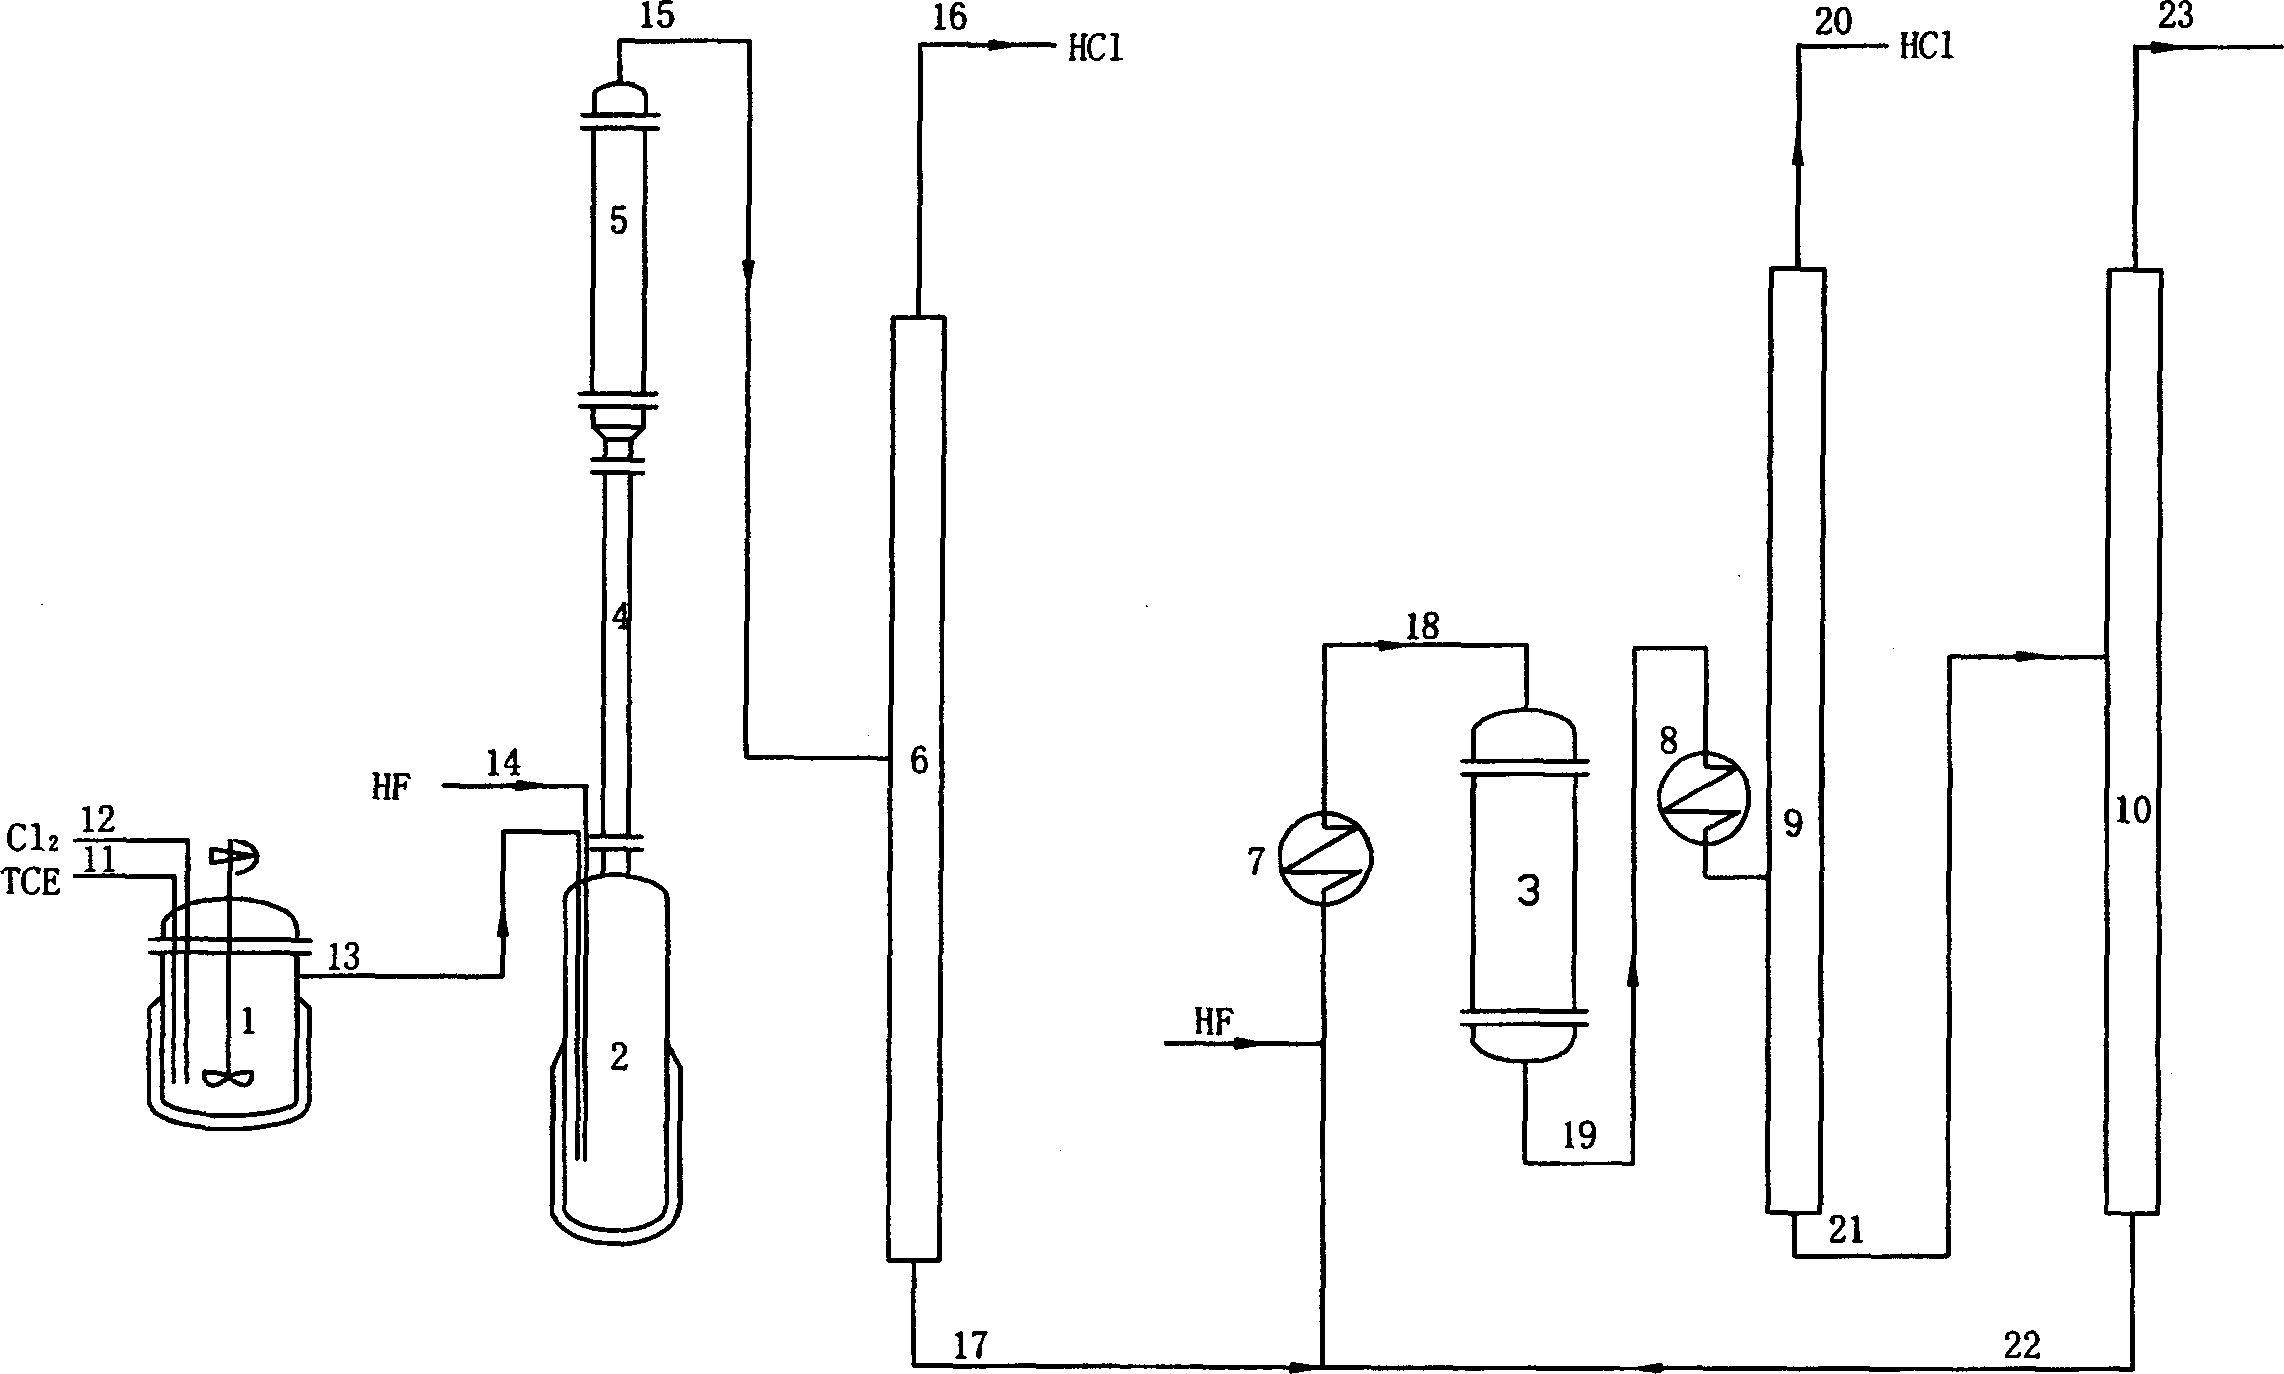 Production of 1,1,1,2-tetrafluoroethykane and pentafuoethane simultaneously